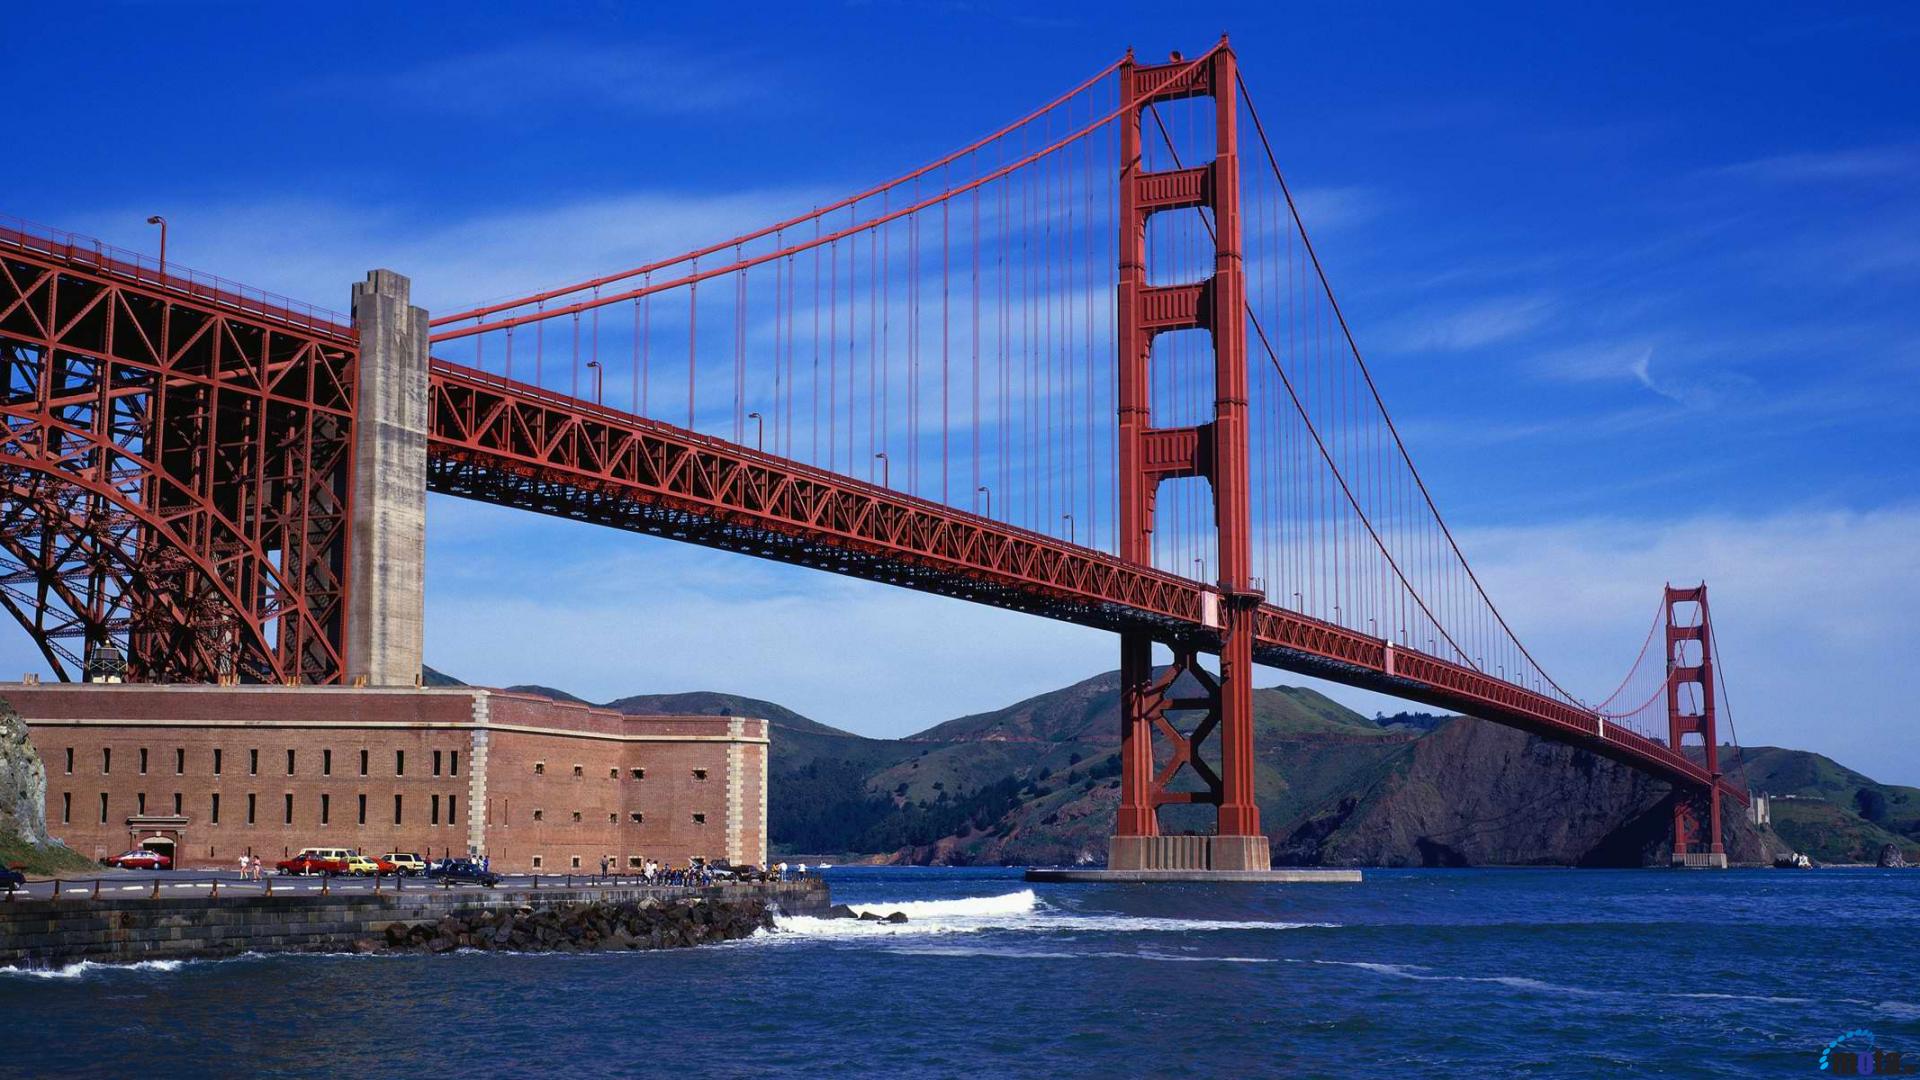 Download Wallpaper Panorama of Golden Gate suspension bridge 1920 x 1920x1080